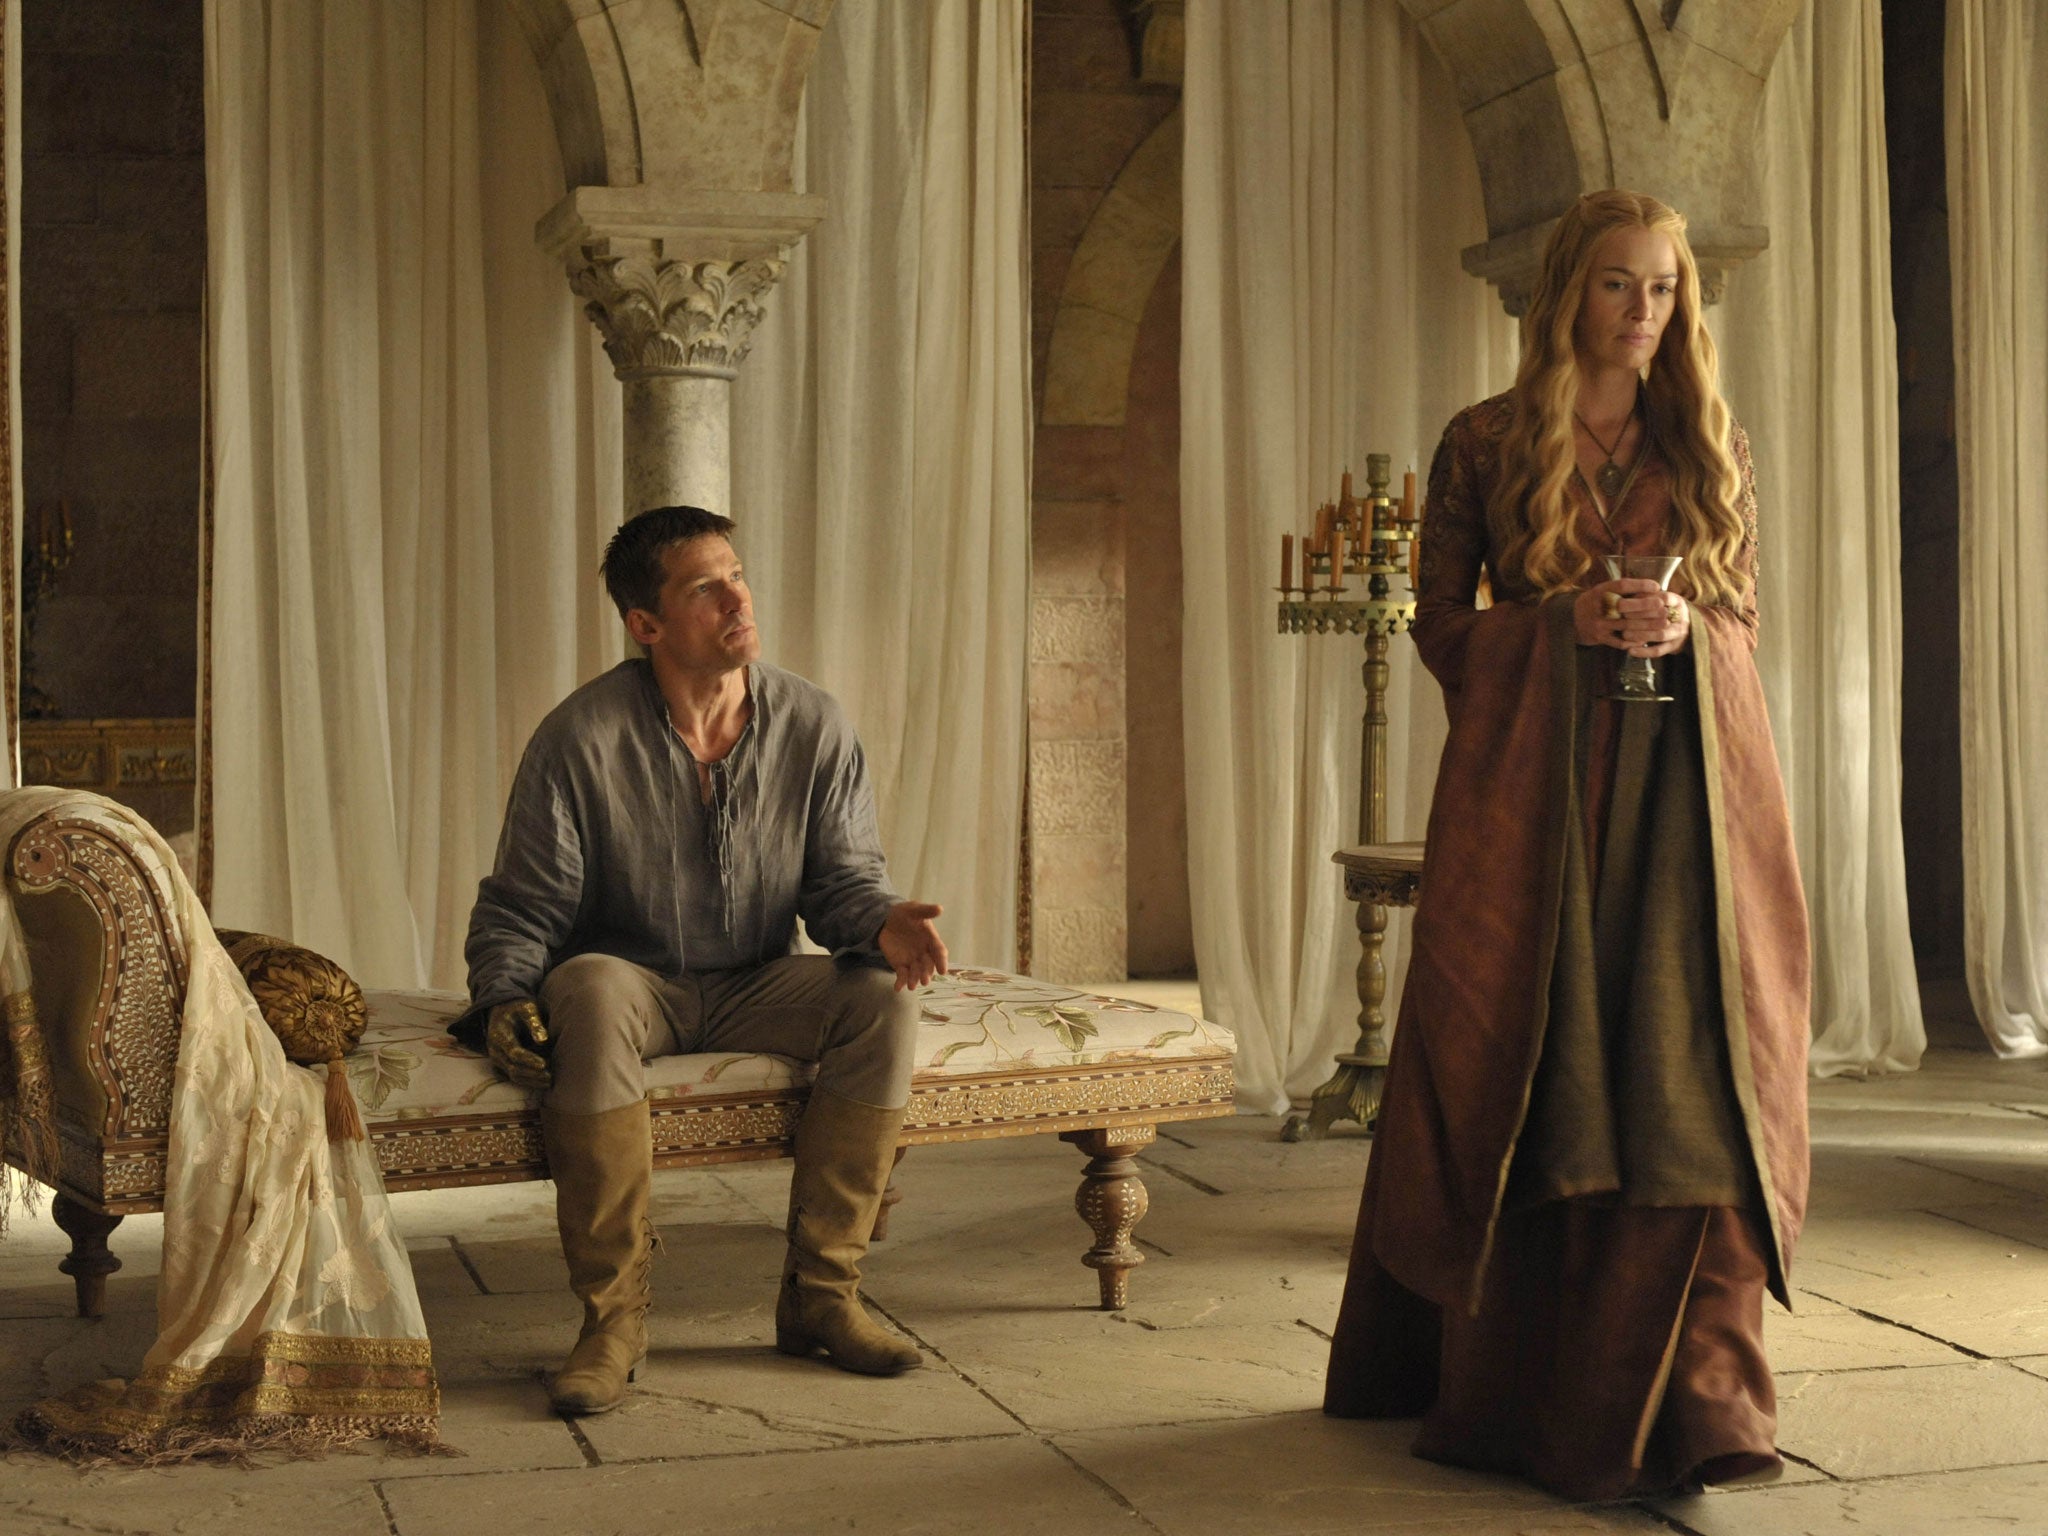 Forbidden love: Nikolaj Coster-Waldau as Jaime Lannister with Lena Headey as his sister, Cersei Lannister